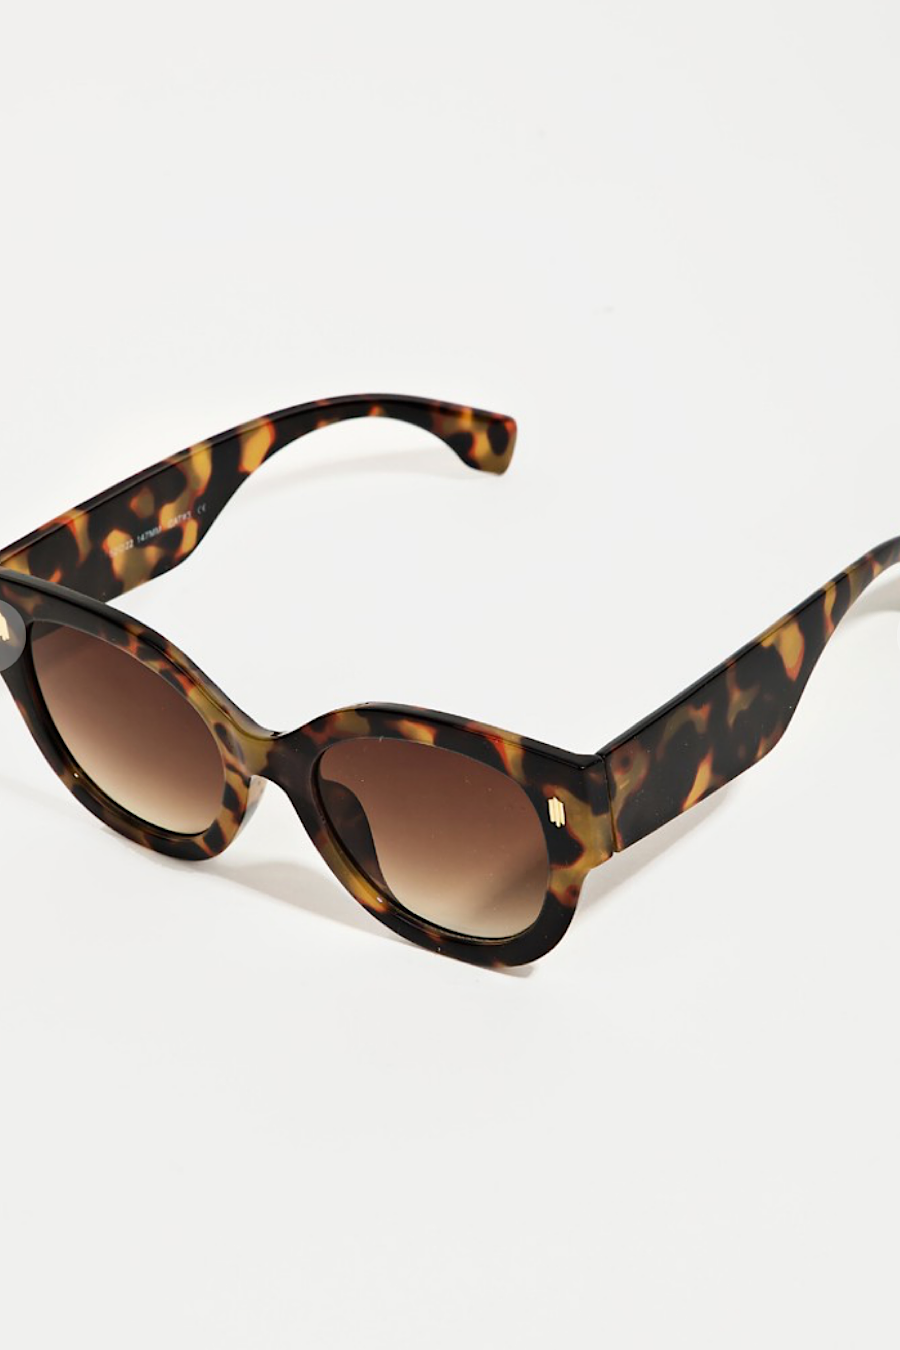 Classic Wayfarer Sunglasses in Sev Colors